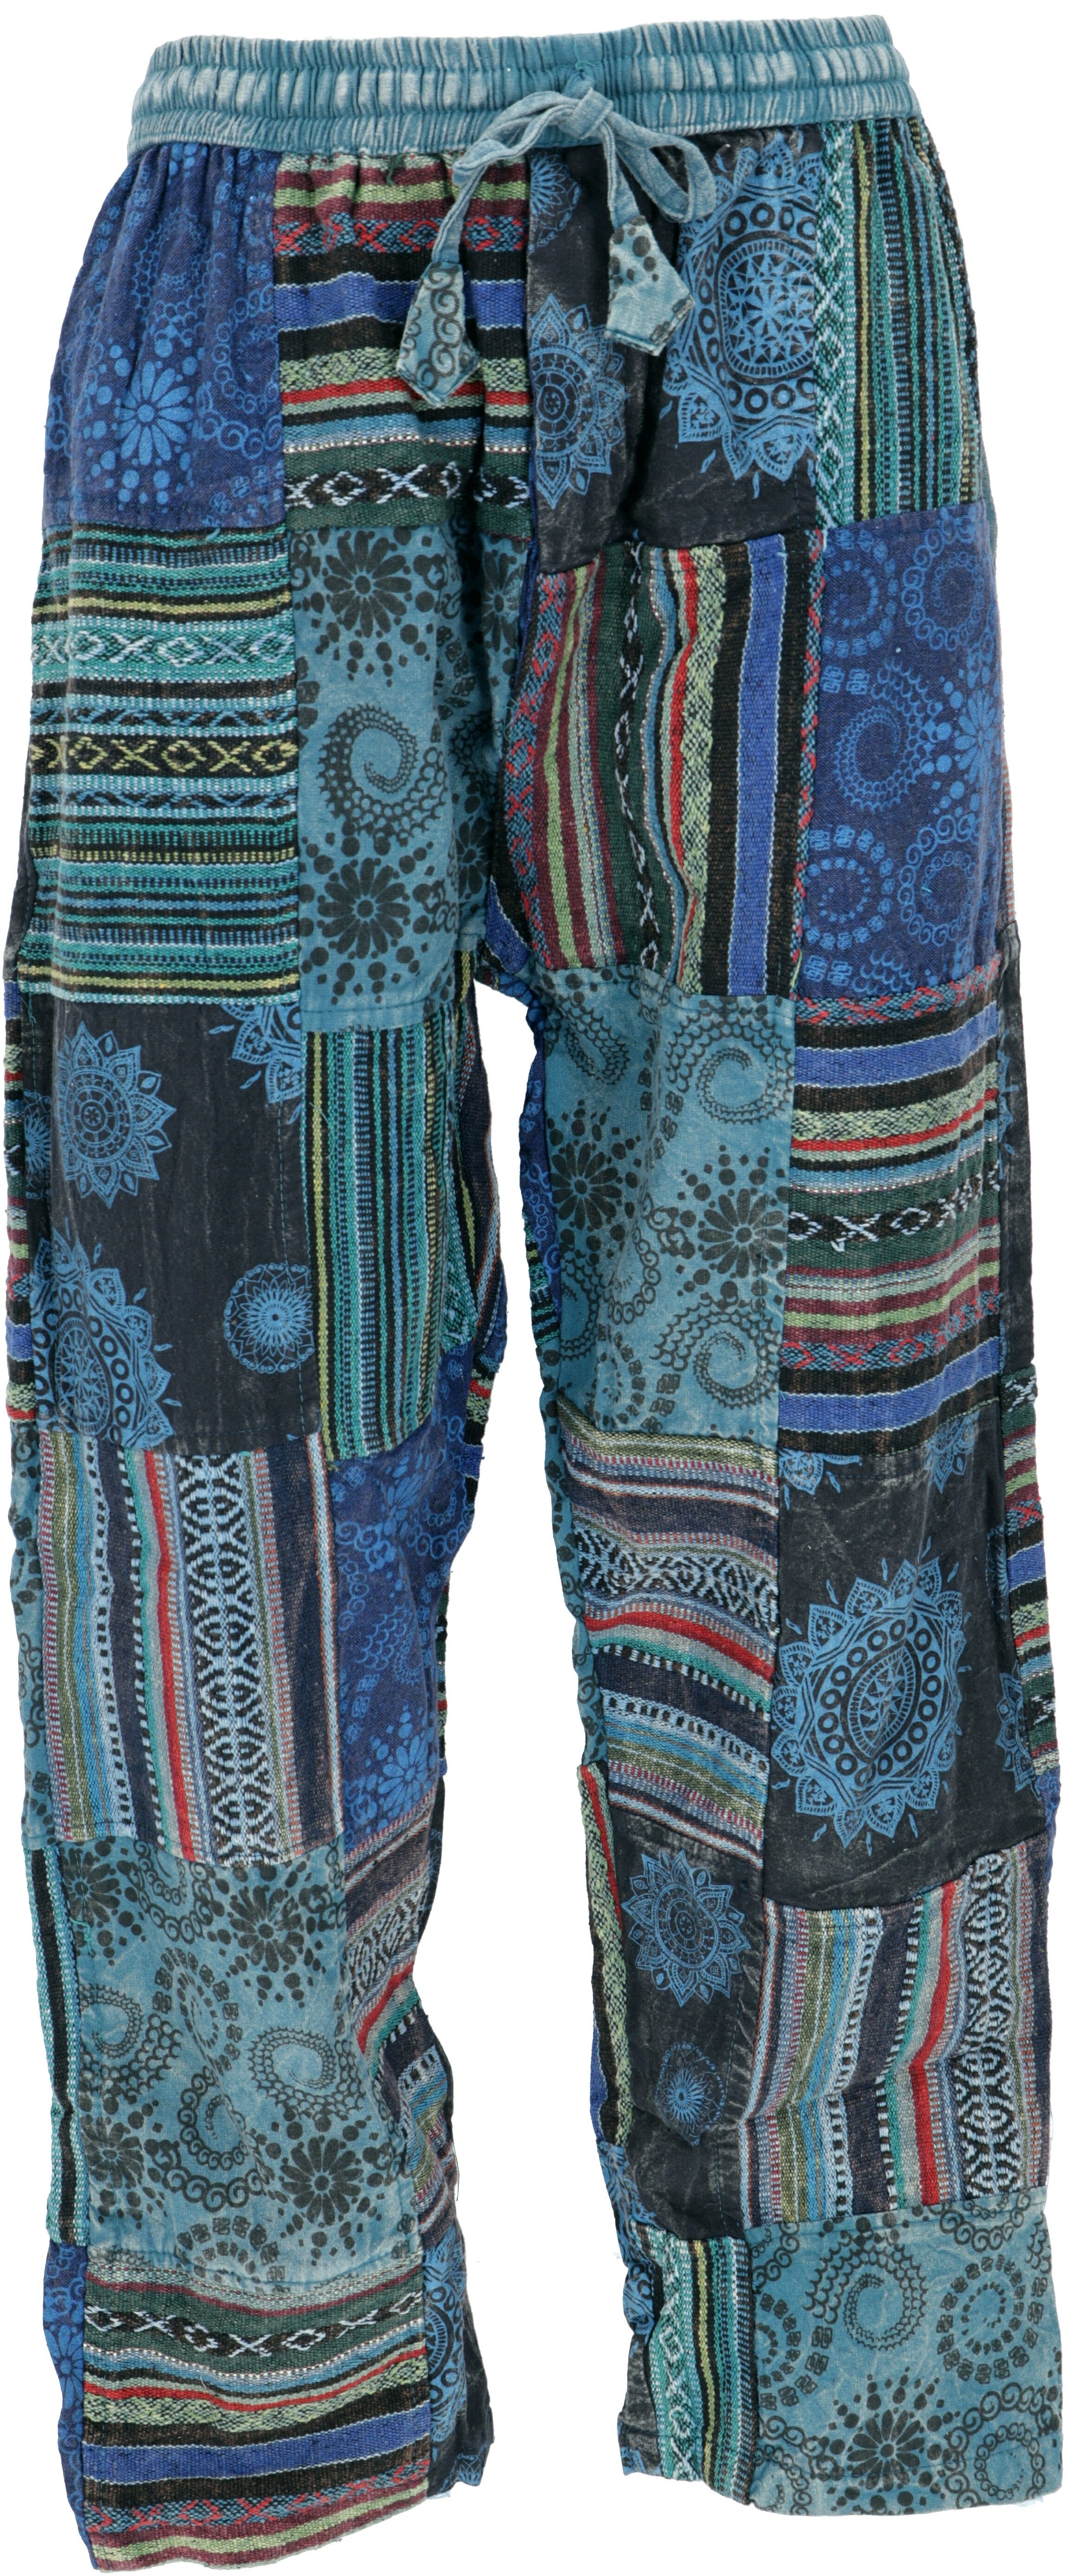 Guru-Shop Relaxhose Patchwork Yogahose, Goa Hose, Loose fit Hose -.. Hippie, Ethno Style, alternative Bekleidung blau